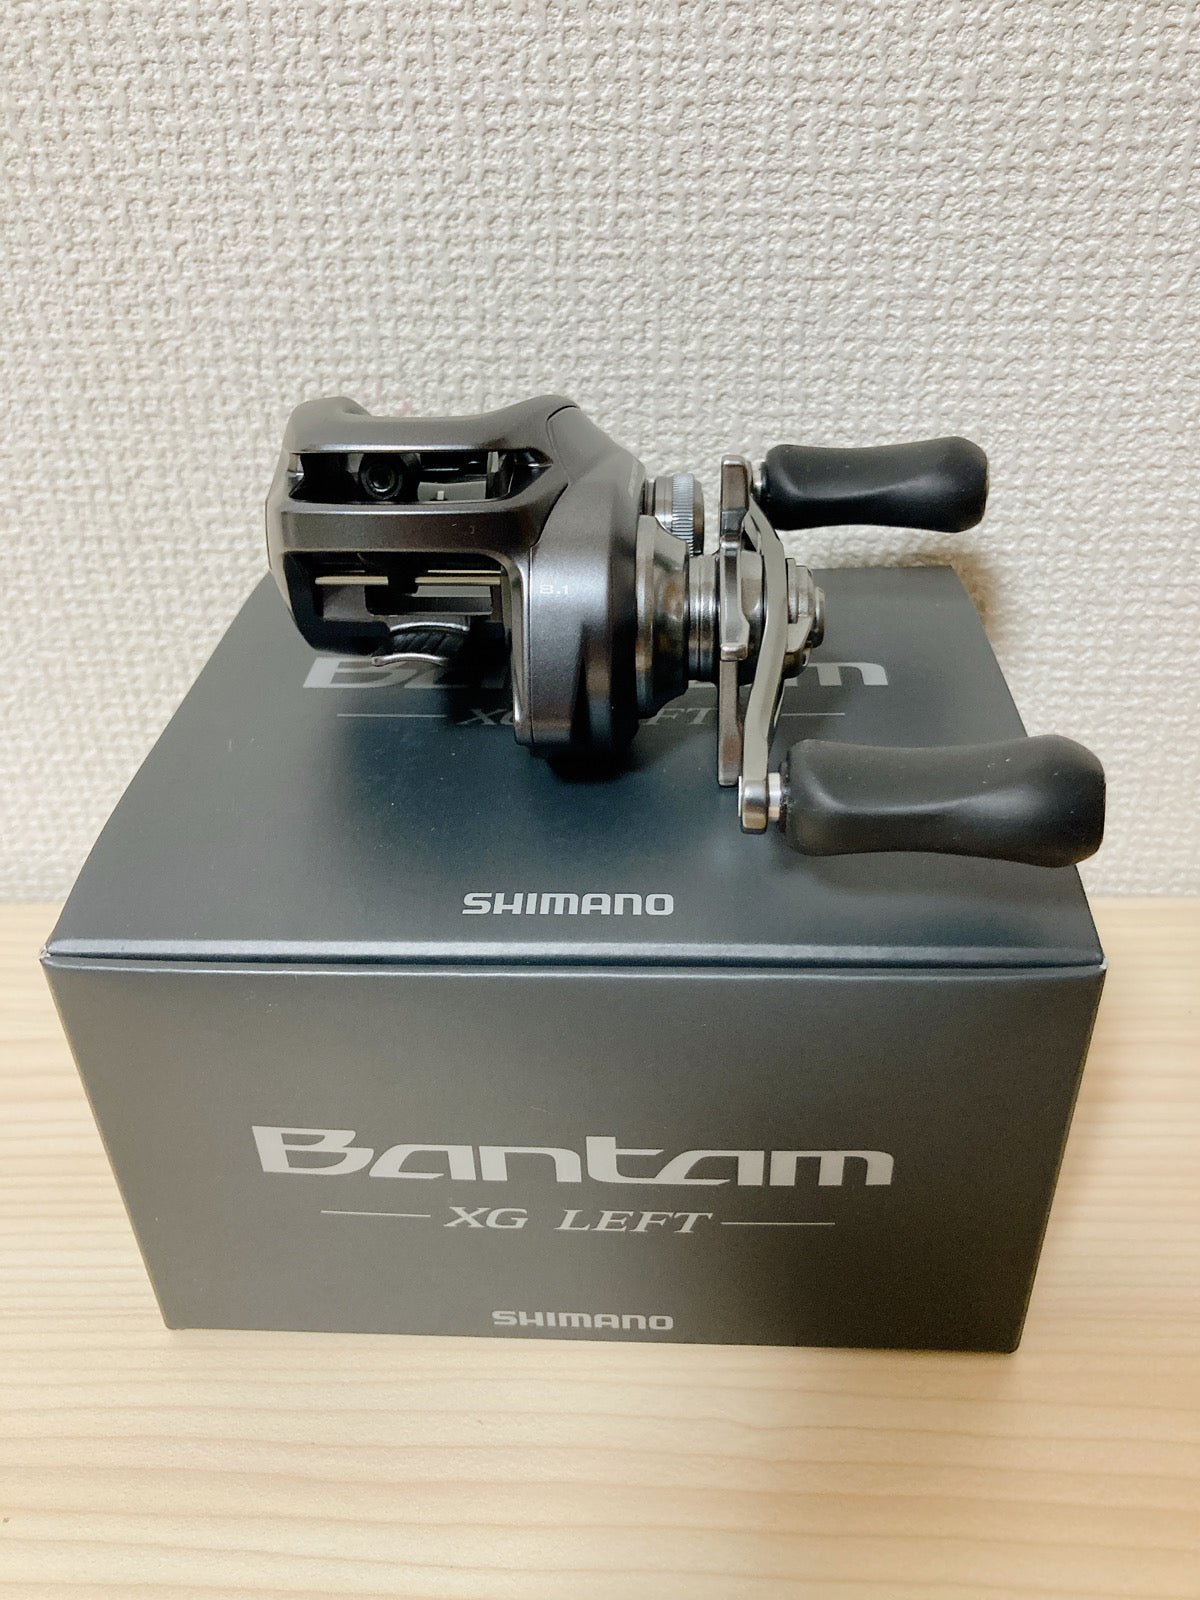 Shimano Baitcasting Reel 22 Bantam XG Left Gear Ratio 8.1:1 IN BOX